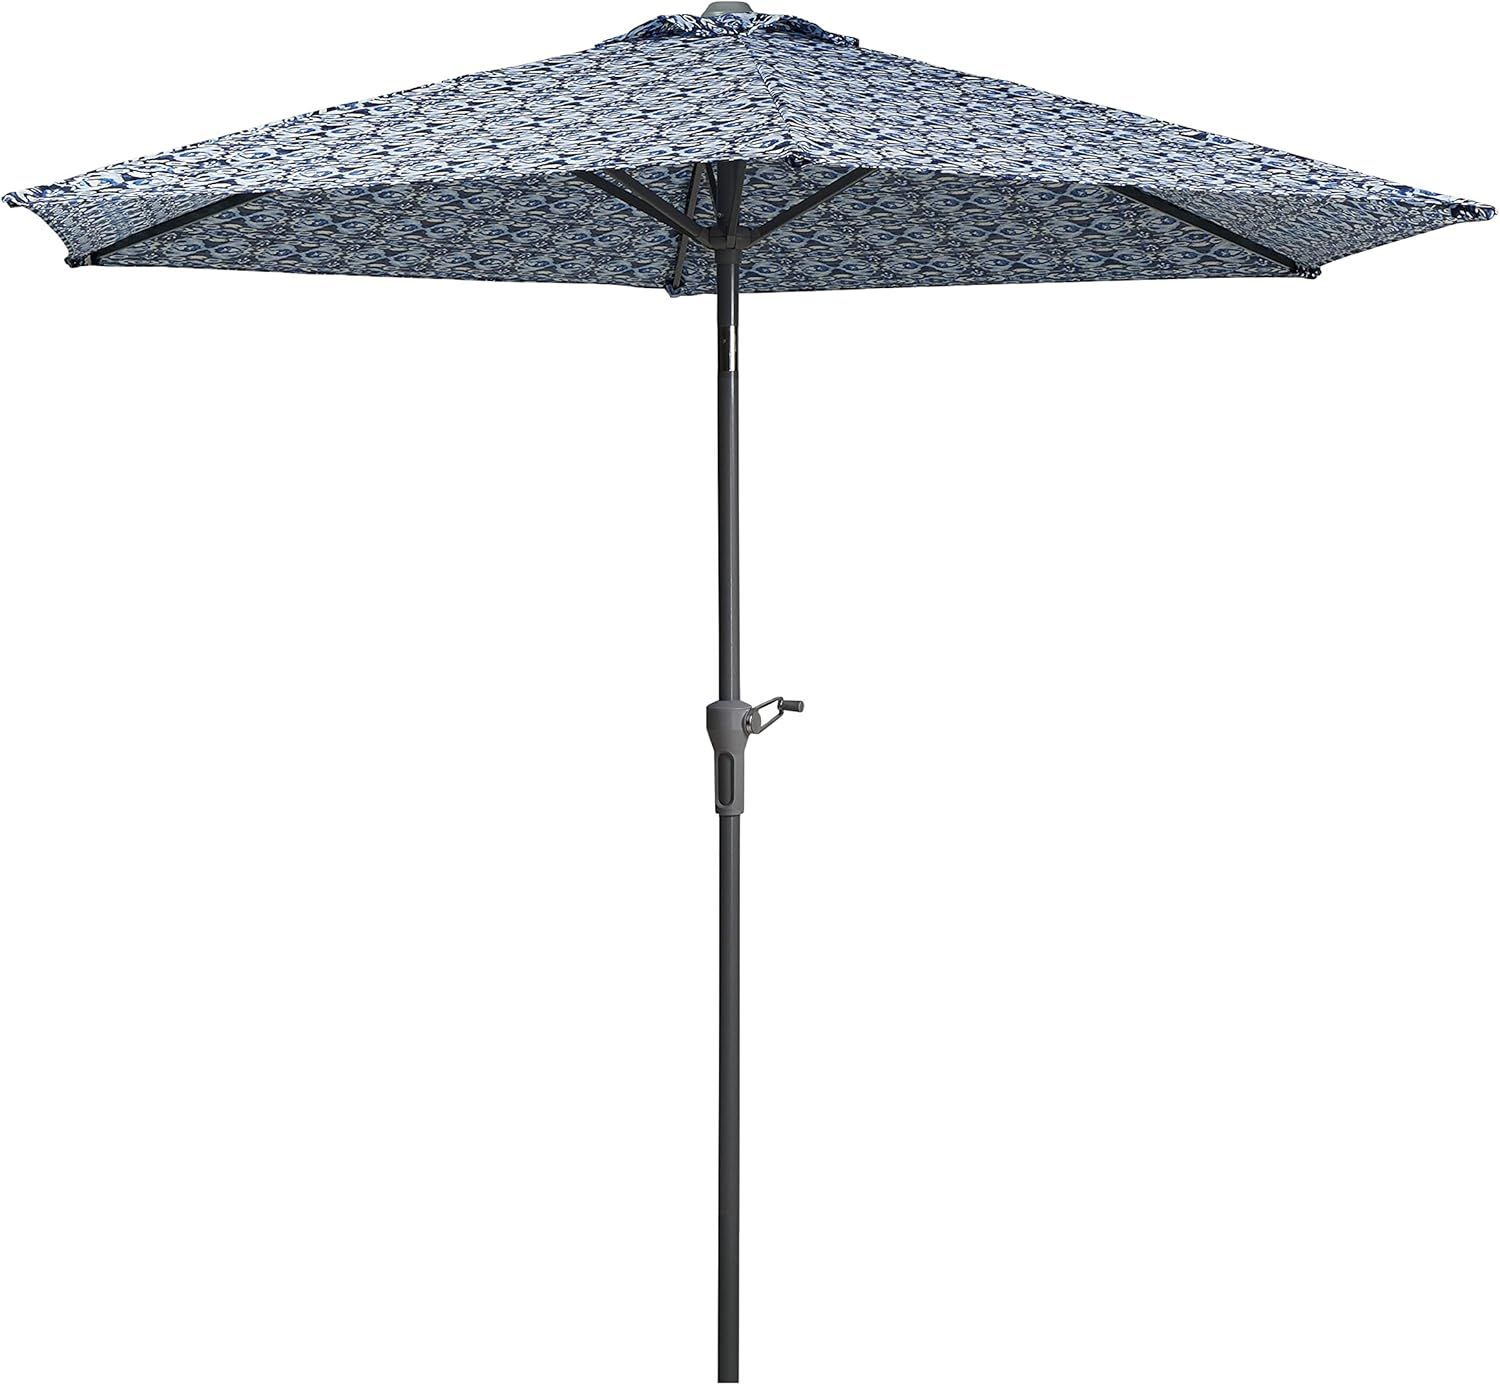 Vera Bradley by Classic Accessories Water-Resistant Market Umbrella, 9 Foot, Ikat Island | Amazon (US)